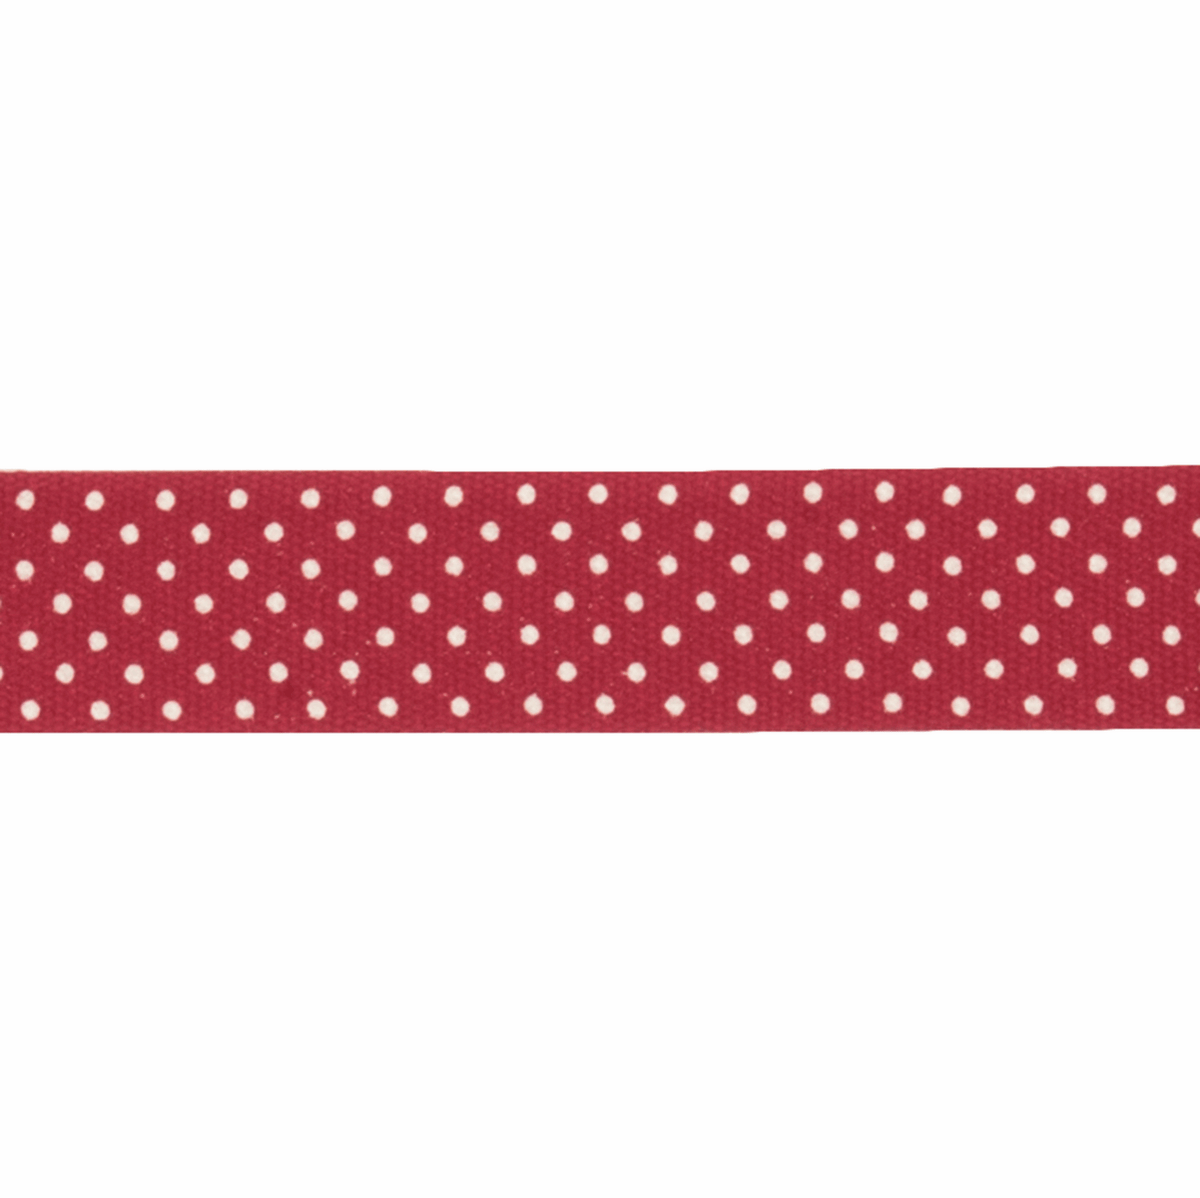 Polka Dot Cotton Ribbon Reel - 5m x 15mm (Red)